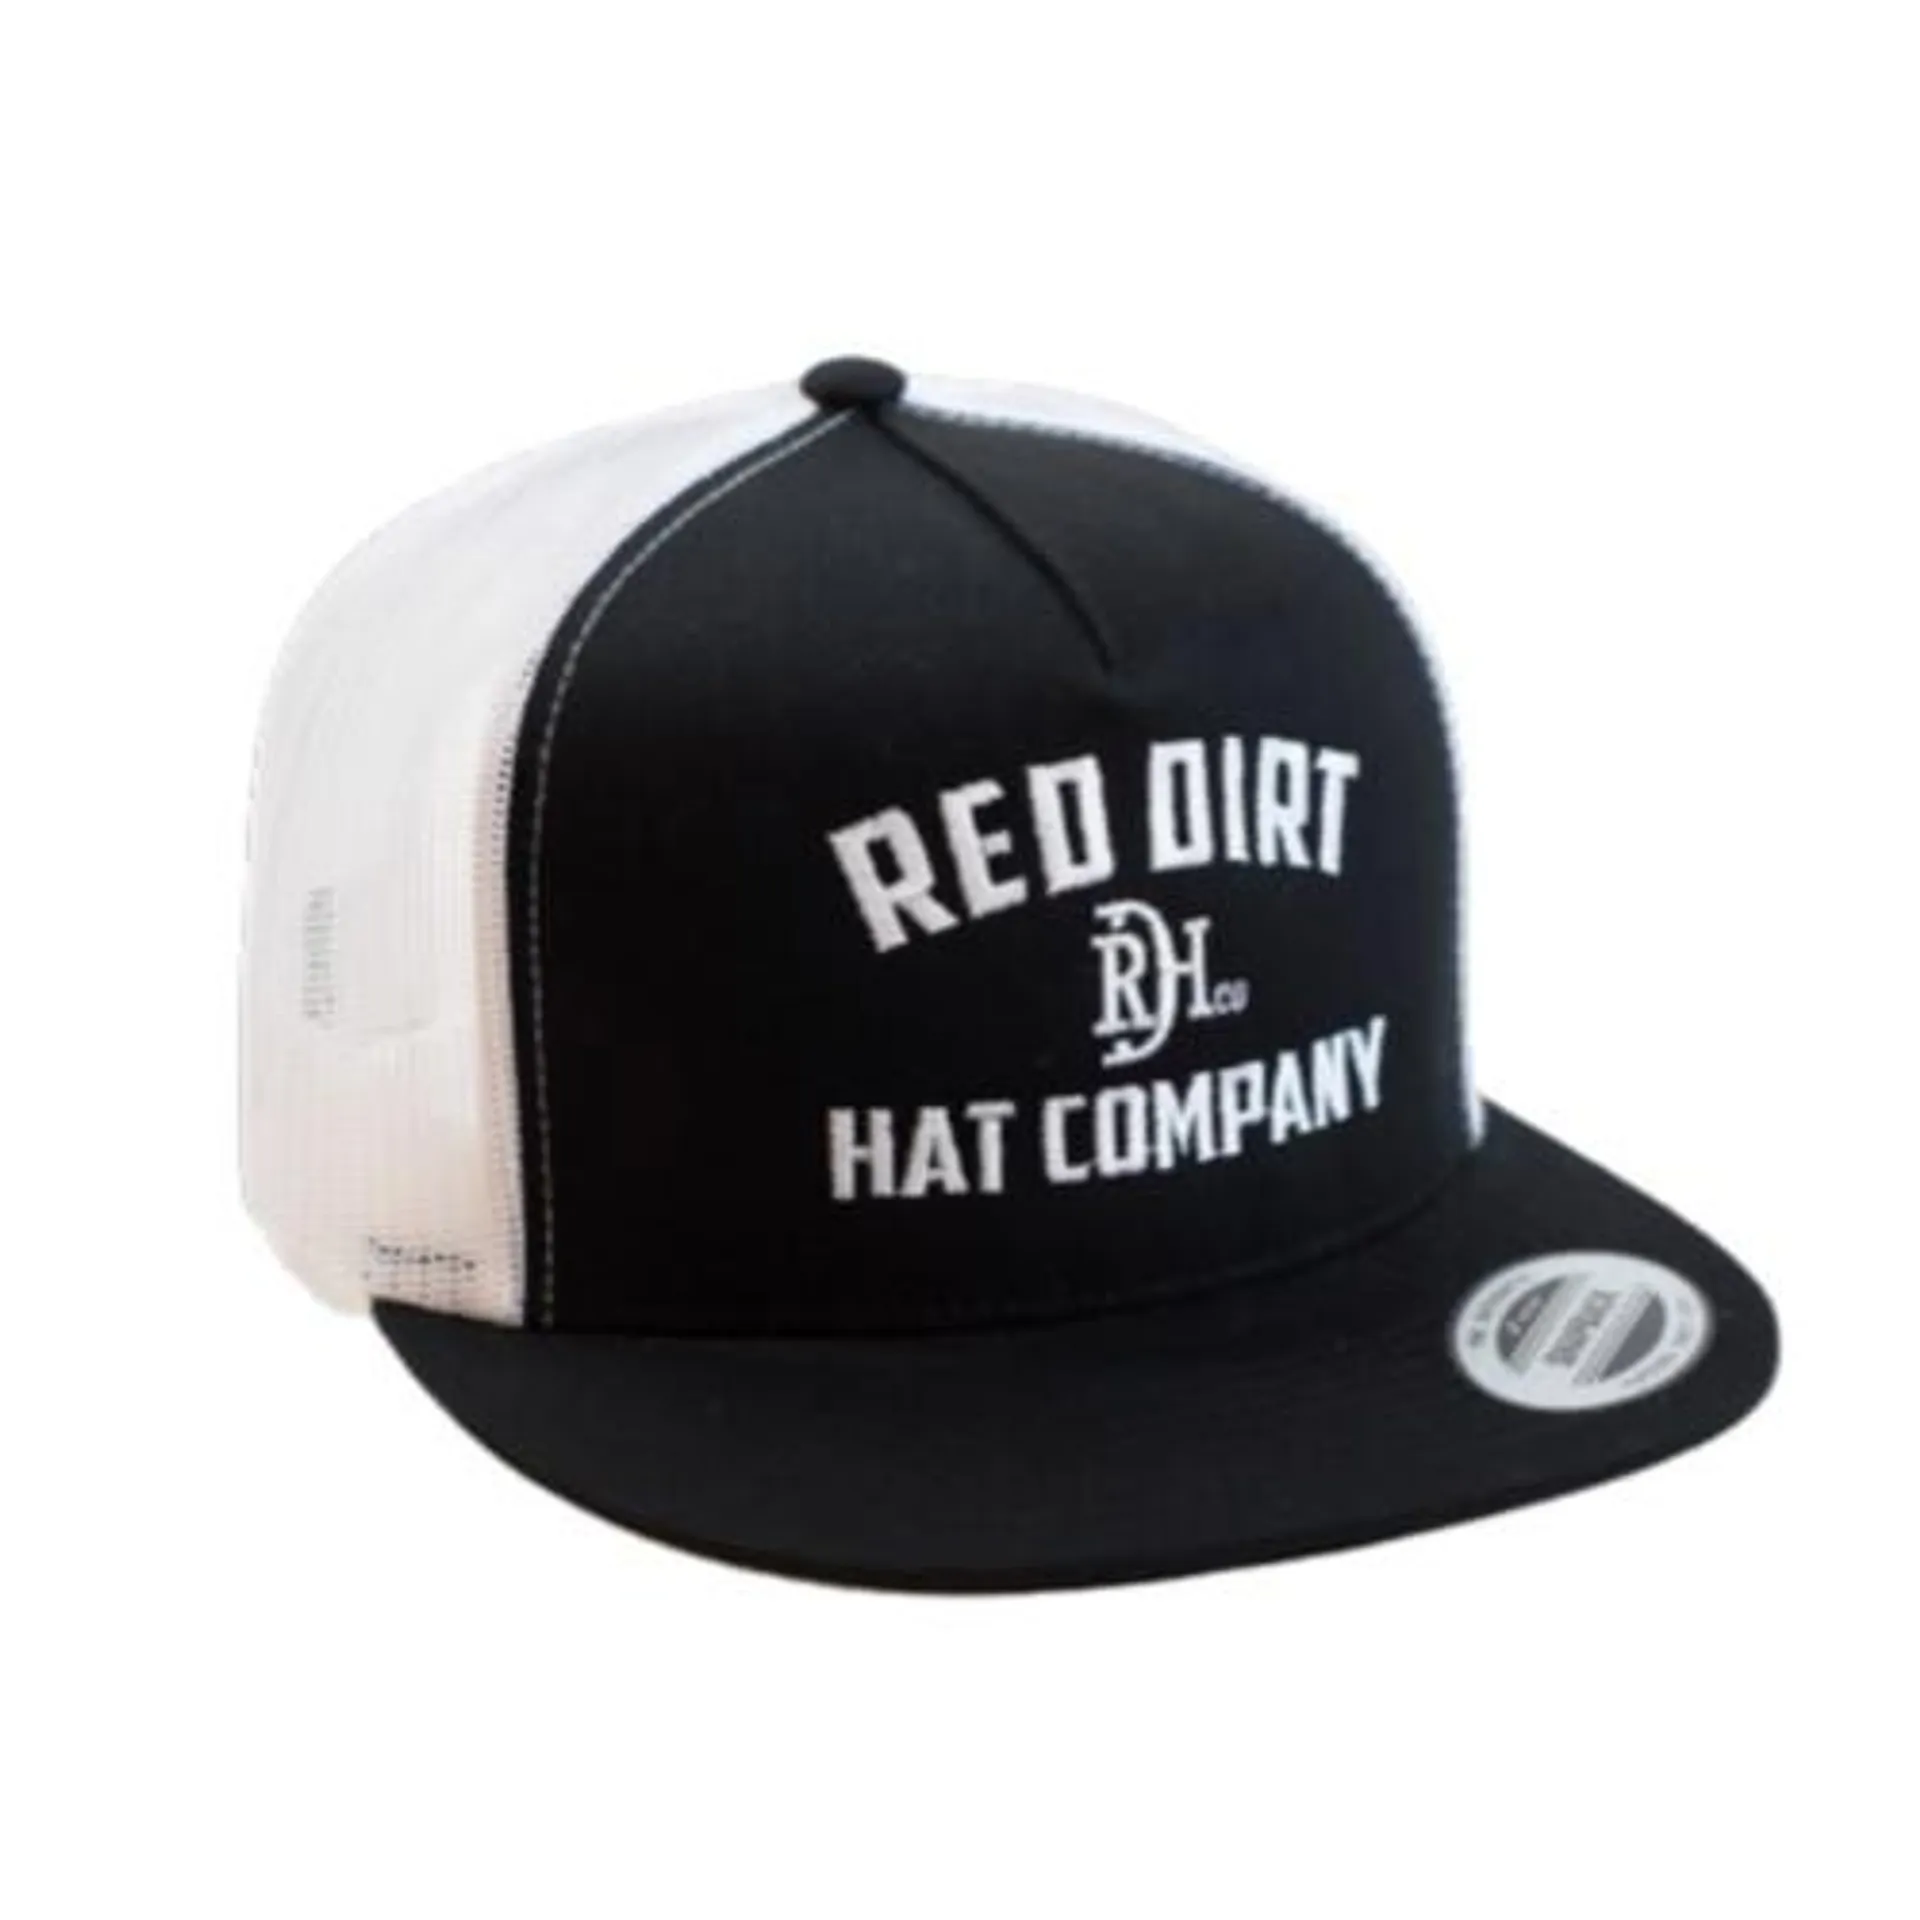 Red Dirt Hat Co. Mens Black & White Direct Stitch Cap